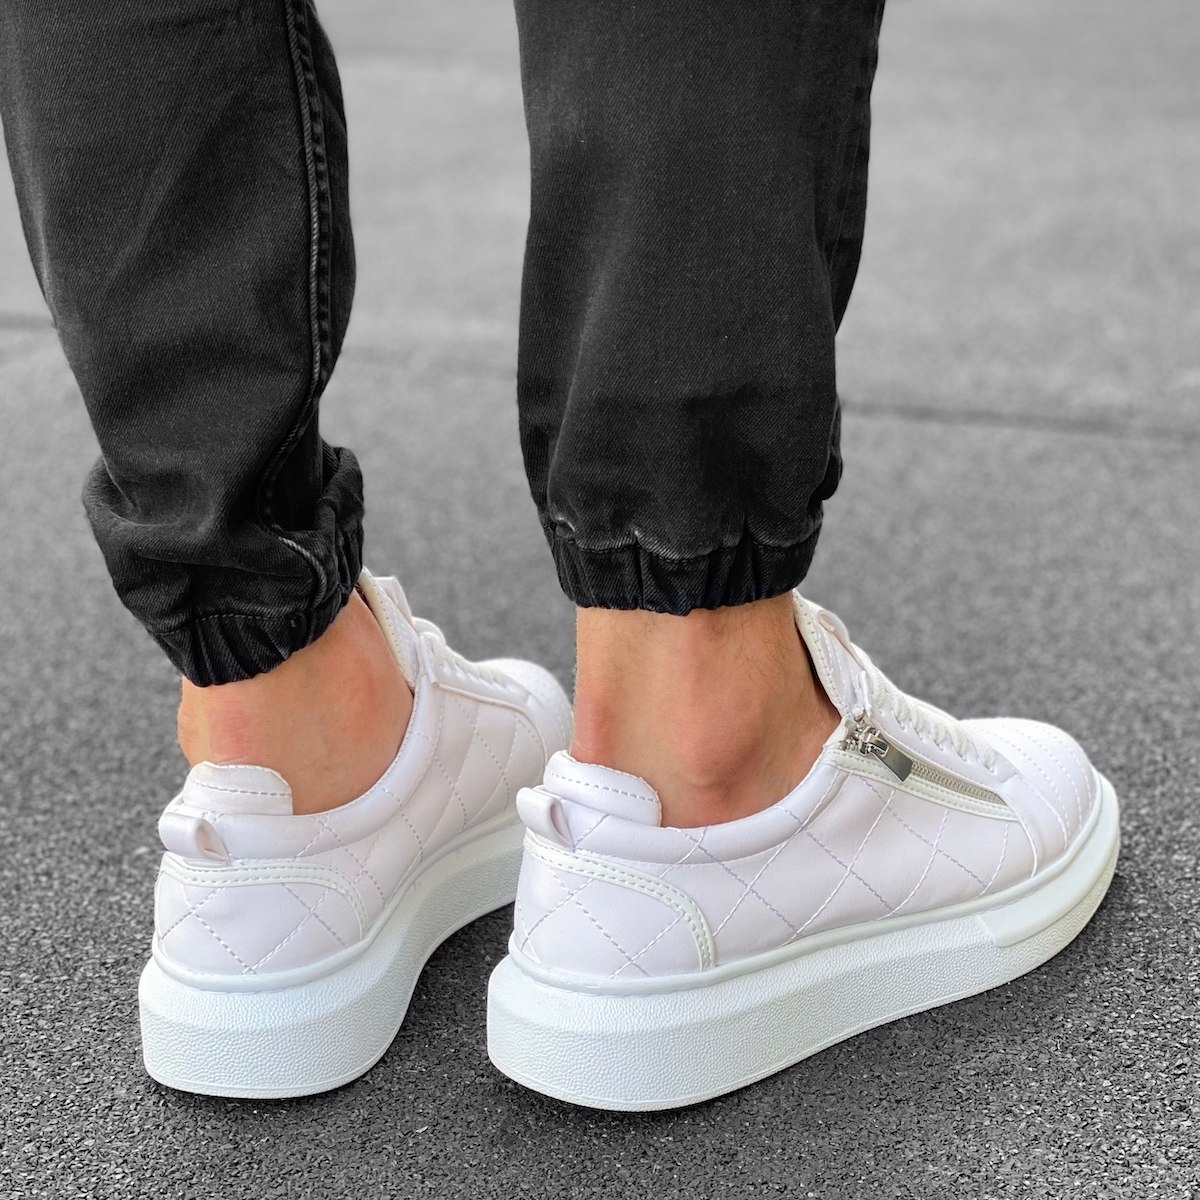 Men’s Stitch Zipper Sneakers Shoes White | Martin Valen